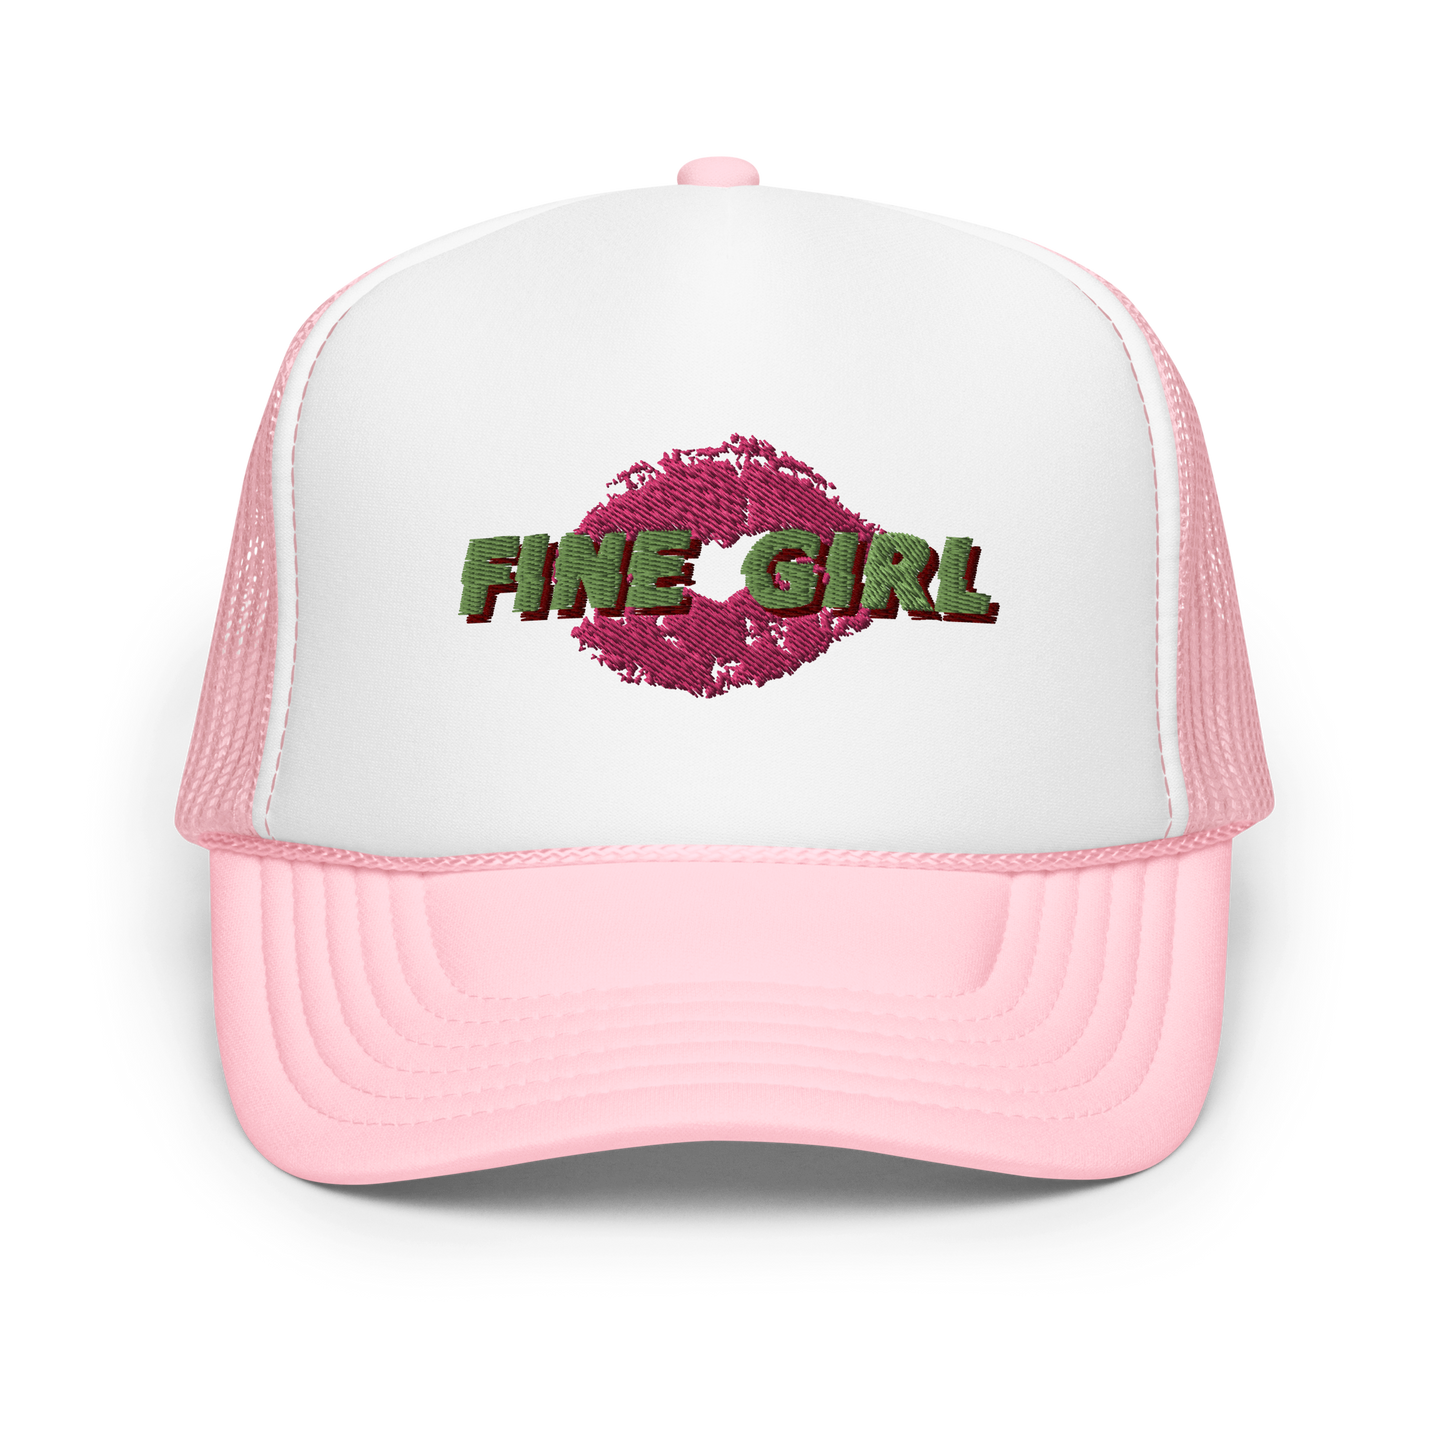 Pink FINE GIRL Trucker hat